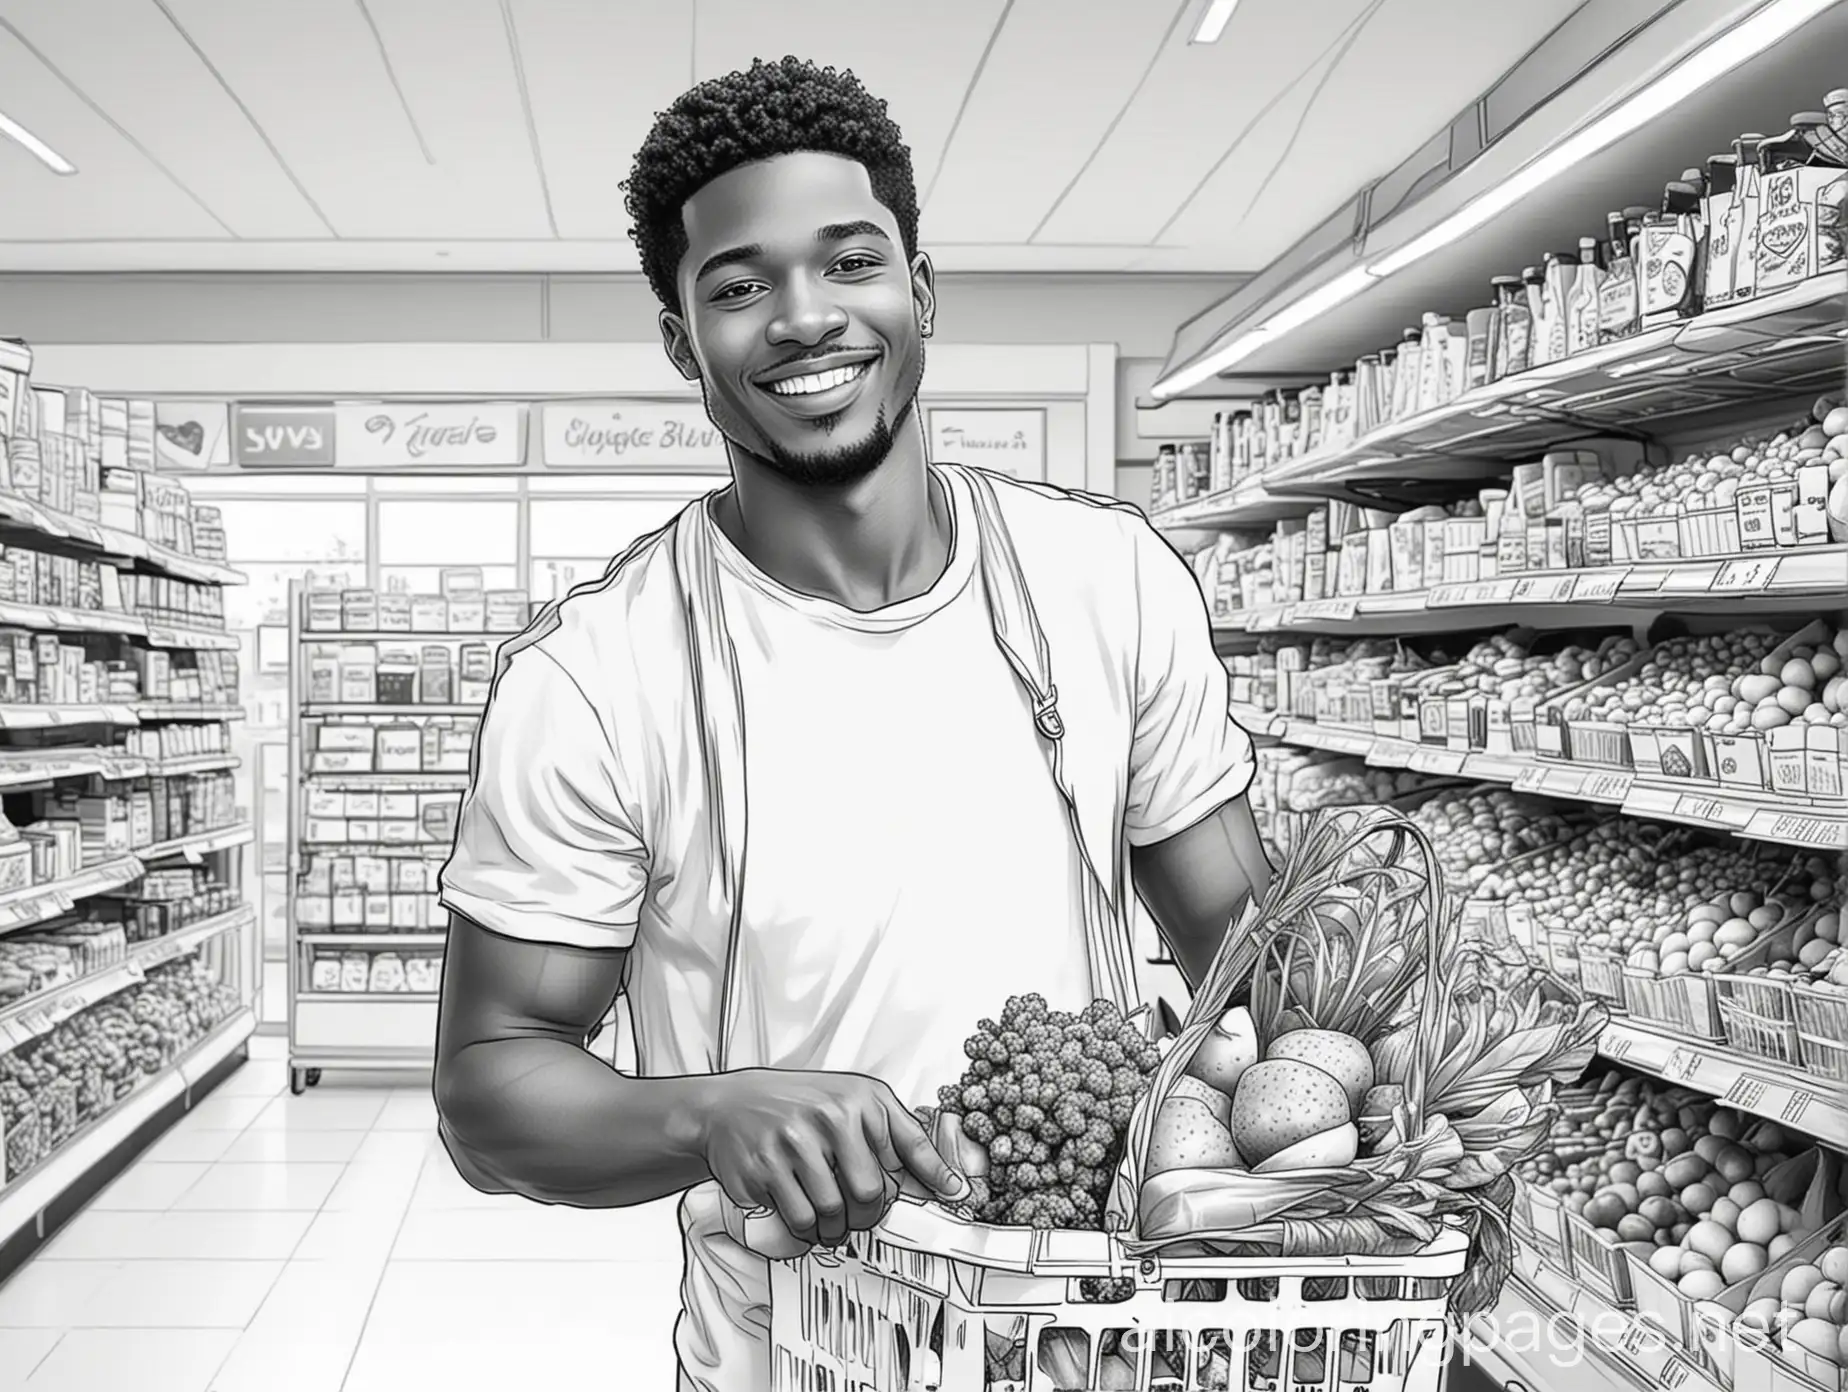 Stylish-Black-Man-Shopping-for-Organic-Produce-at-the-Supermarket